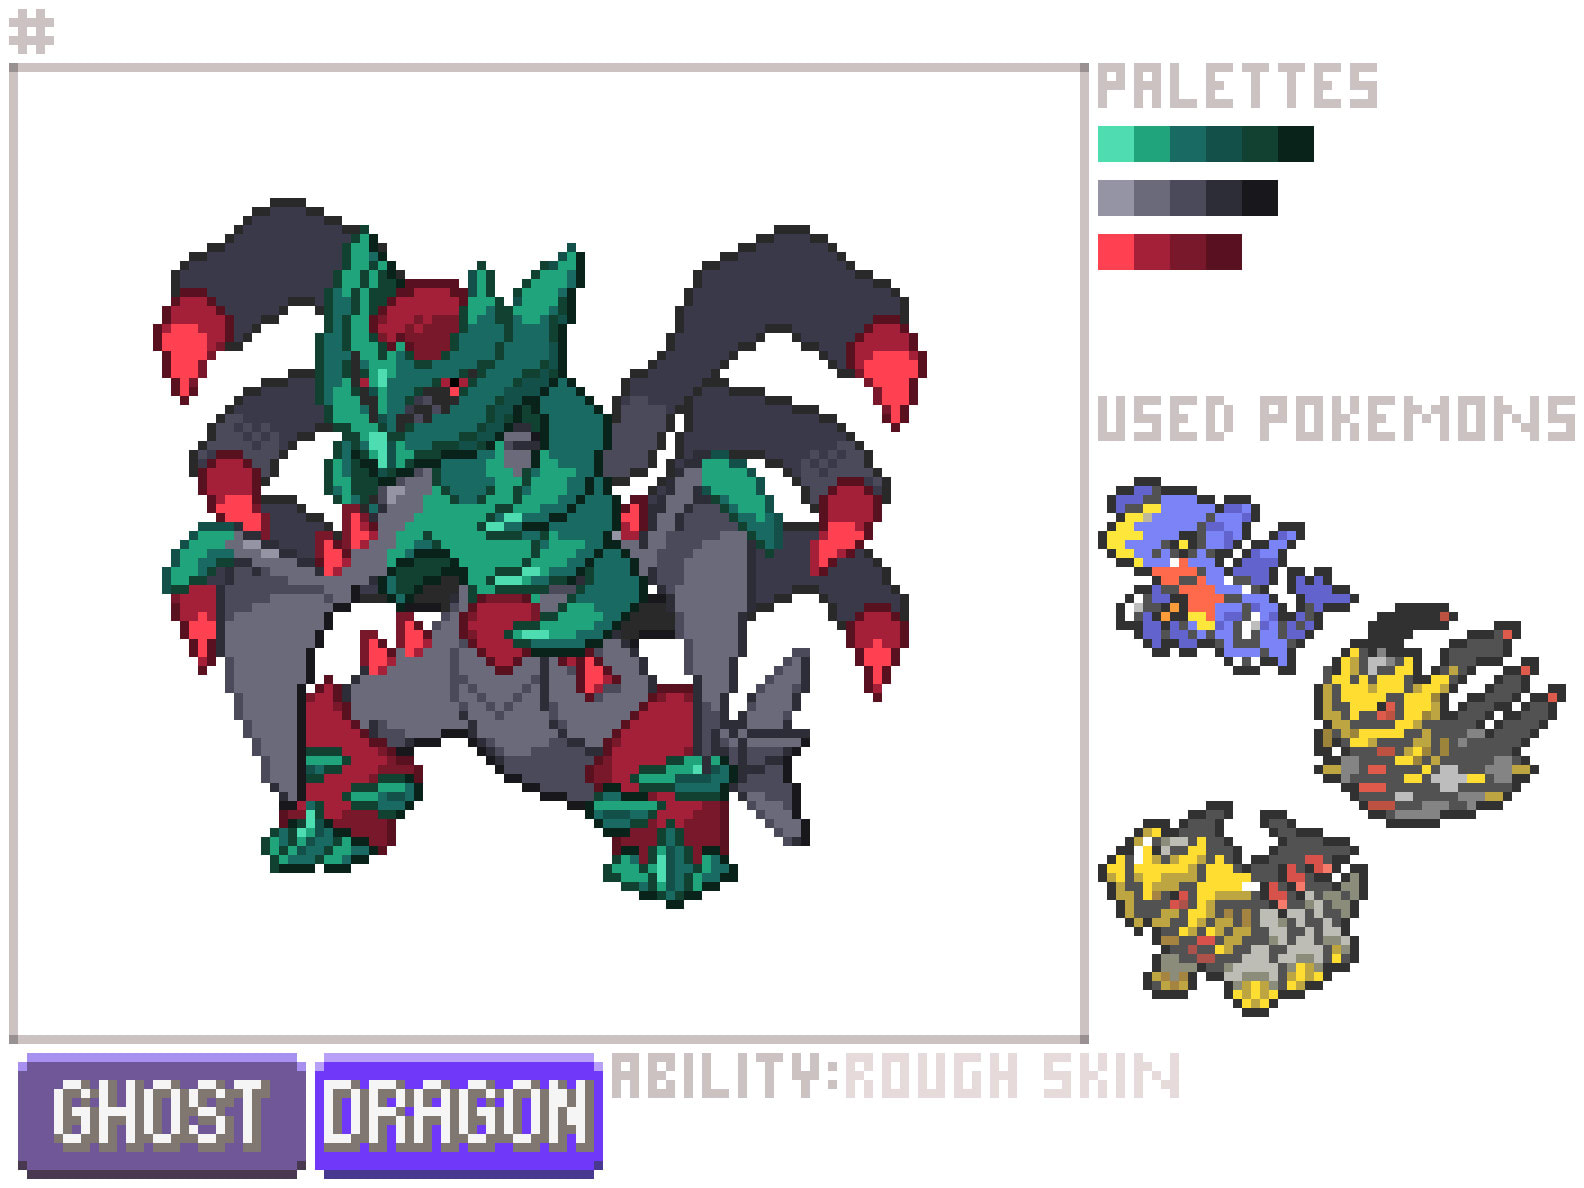 Pokemon Fusion Special: Original Dragon